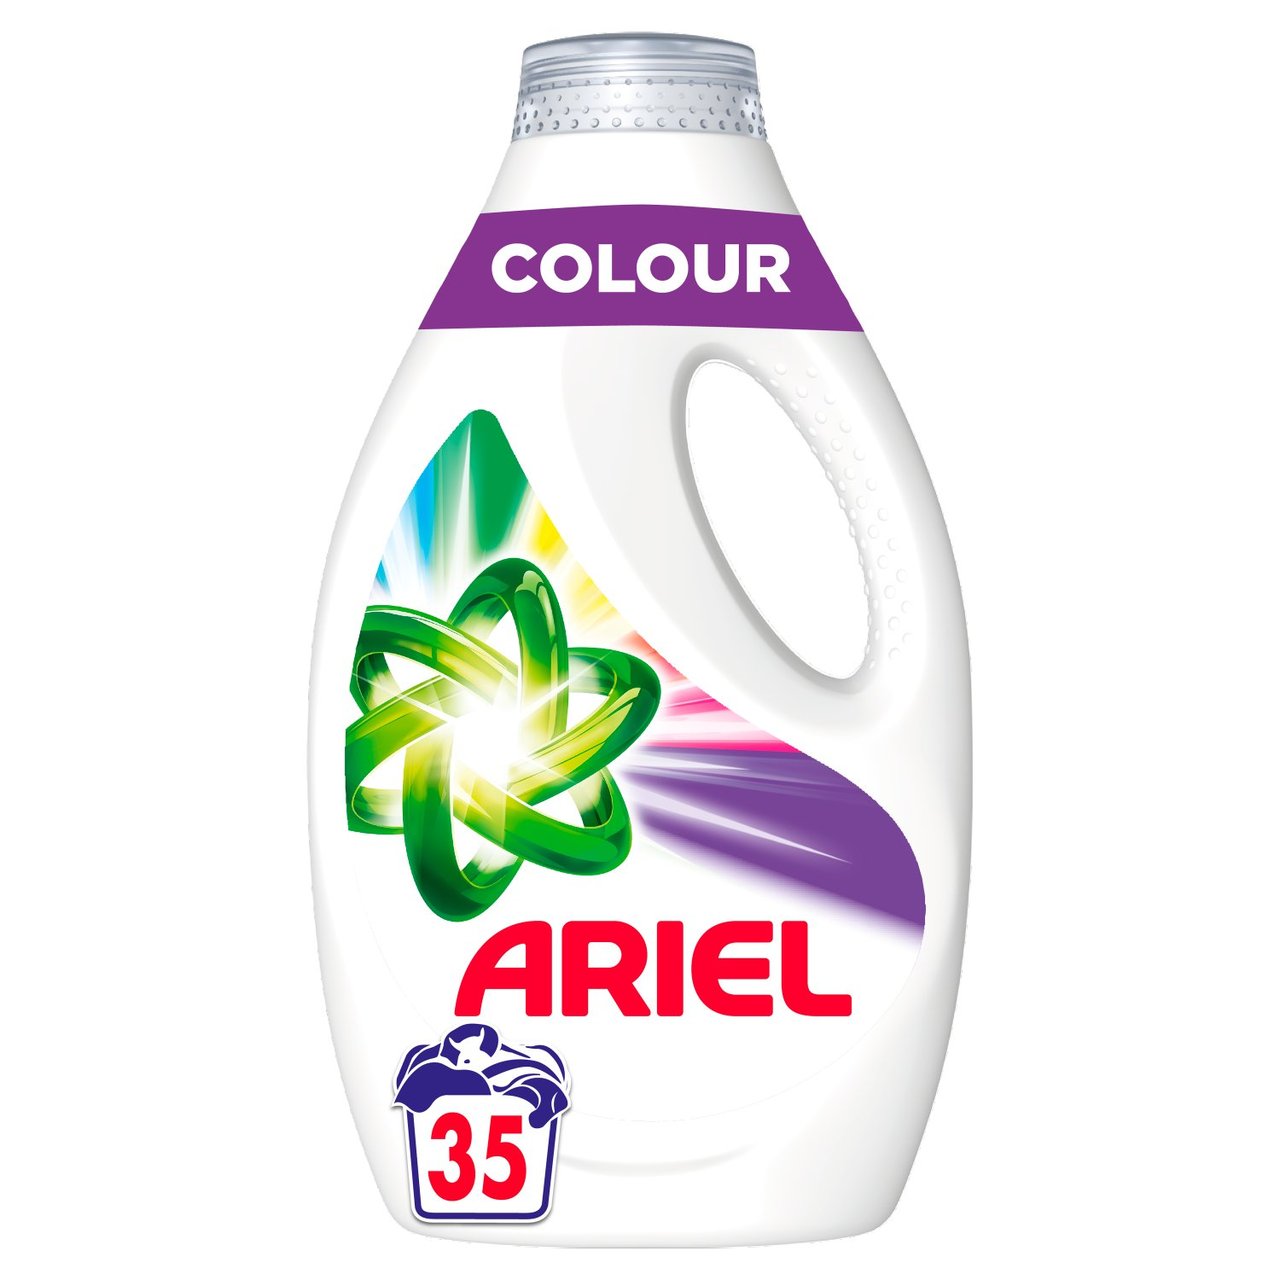 Ariel With Lenor Washing Liquid Gel 38 Washes